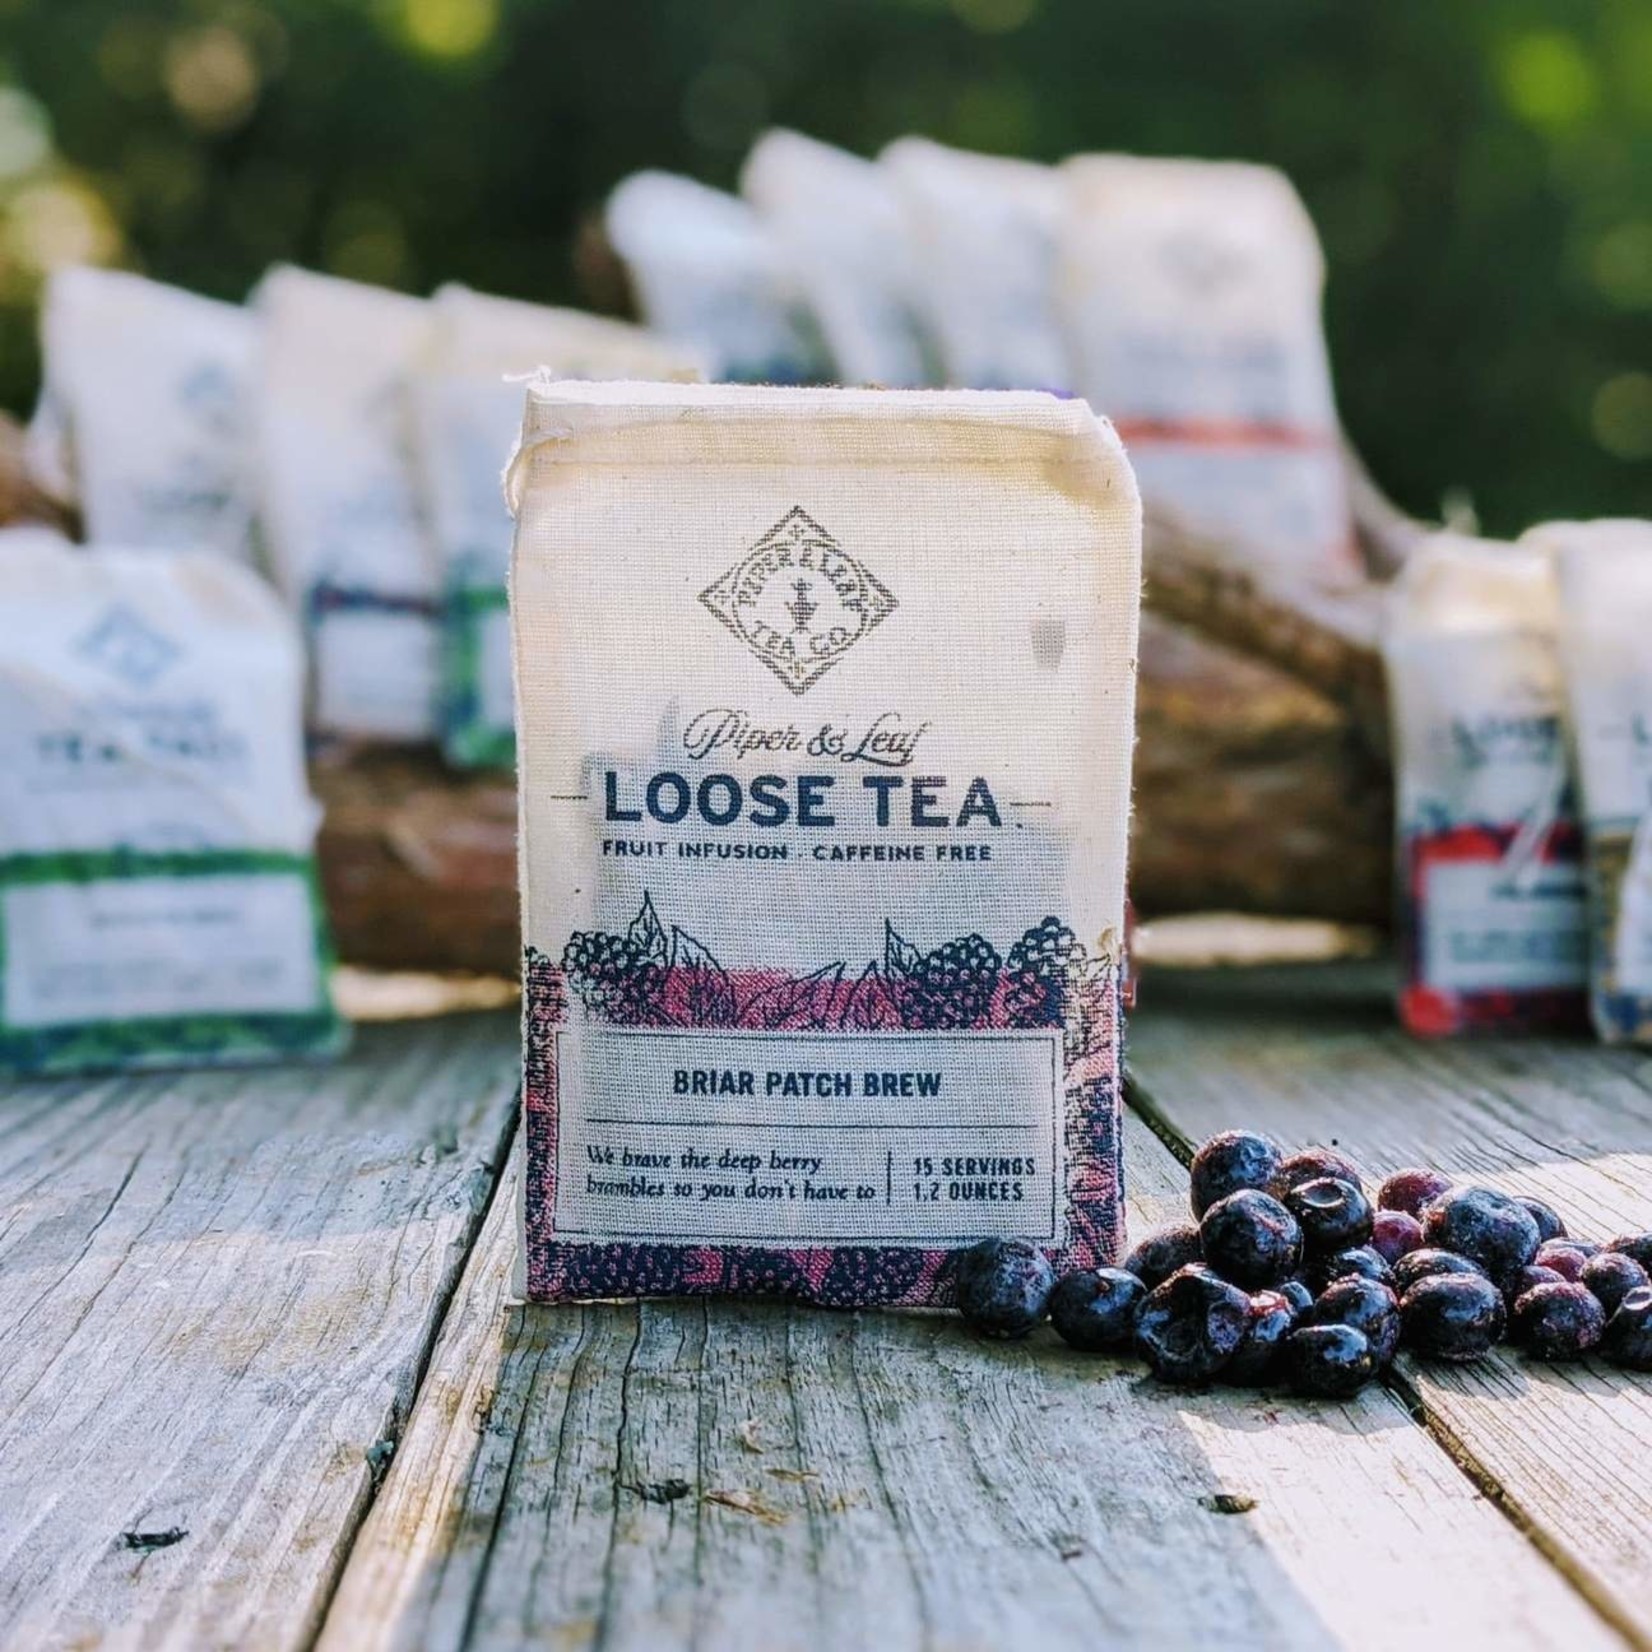 Piper & Leaf Tea Co. Briar Patch Brew Muslin Bag of Loose Leaf Tea